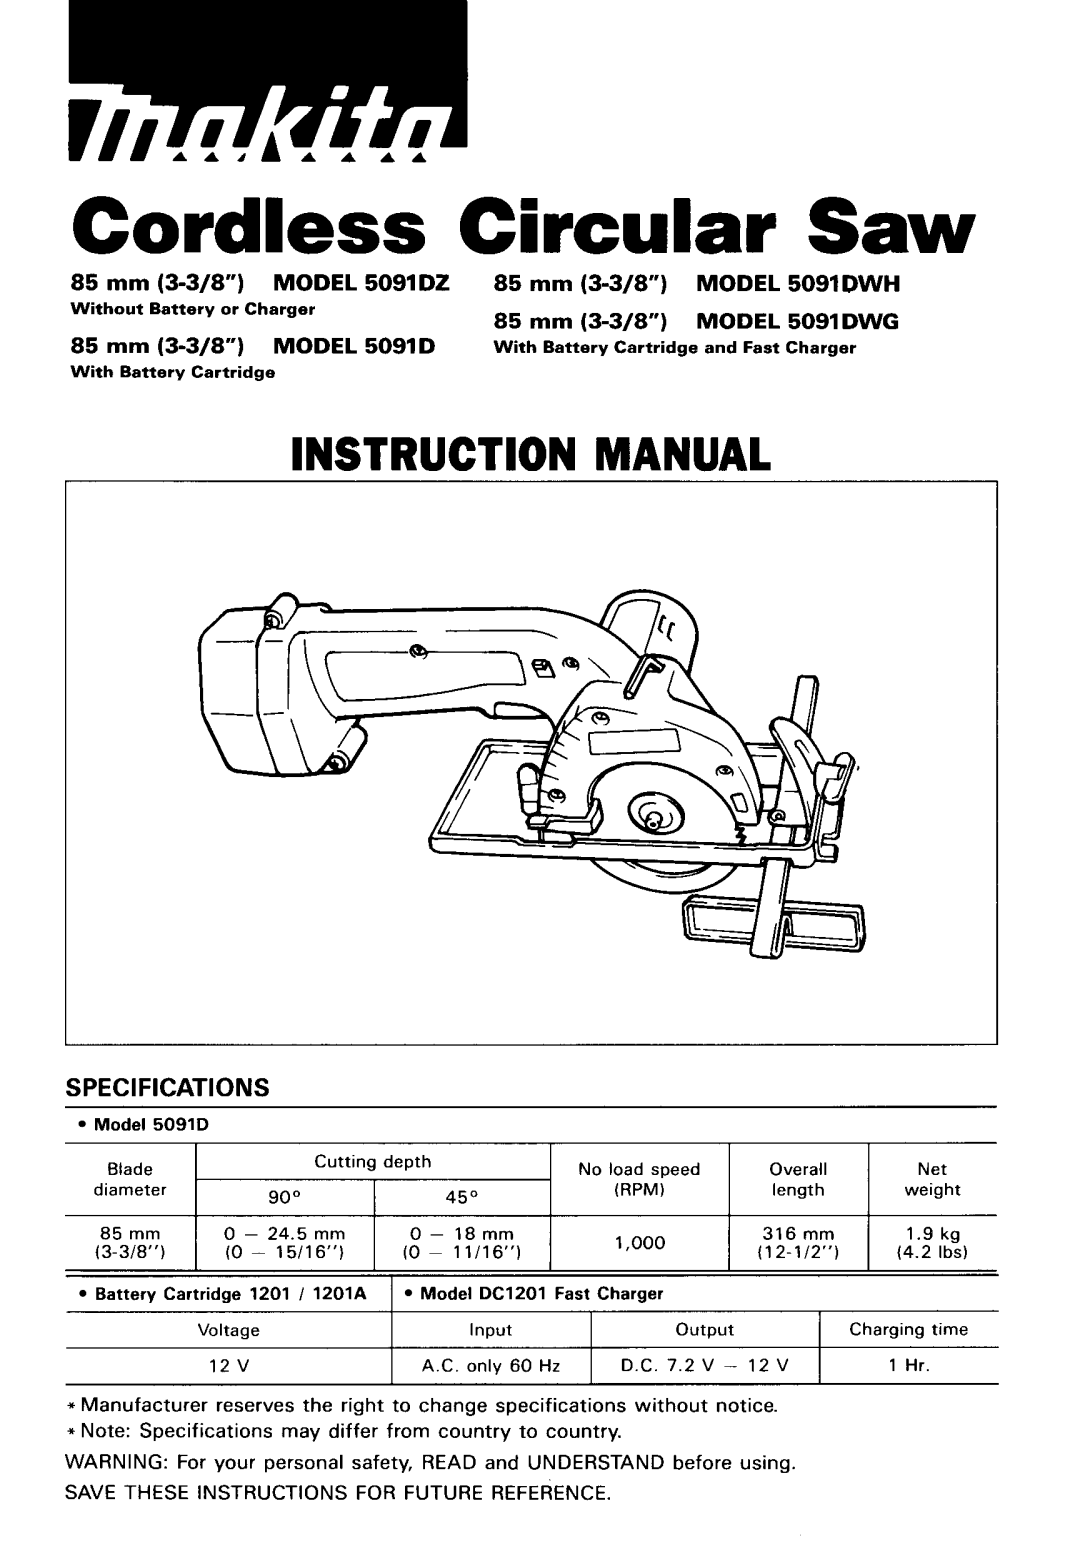 Makita 5091DWG instruction manual Cordless Circular Saw, Instruction Manual, Specifications, mm 3-3/8, MODEL 5091DZ, 85 mm 